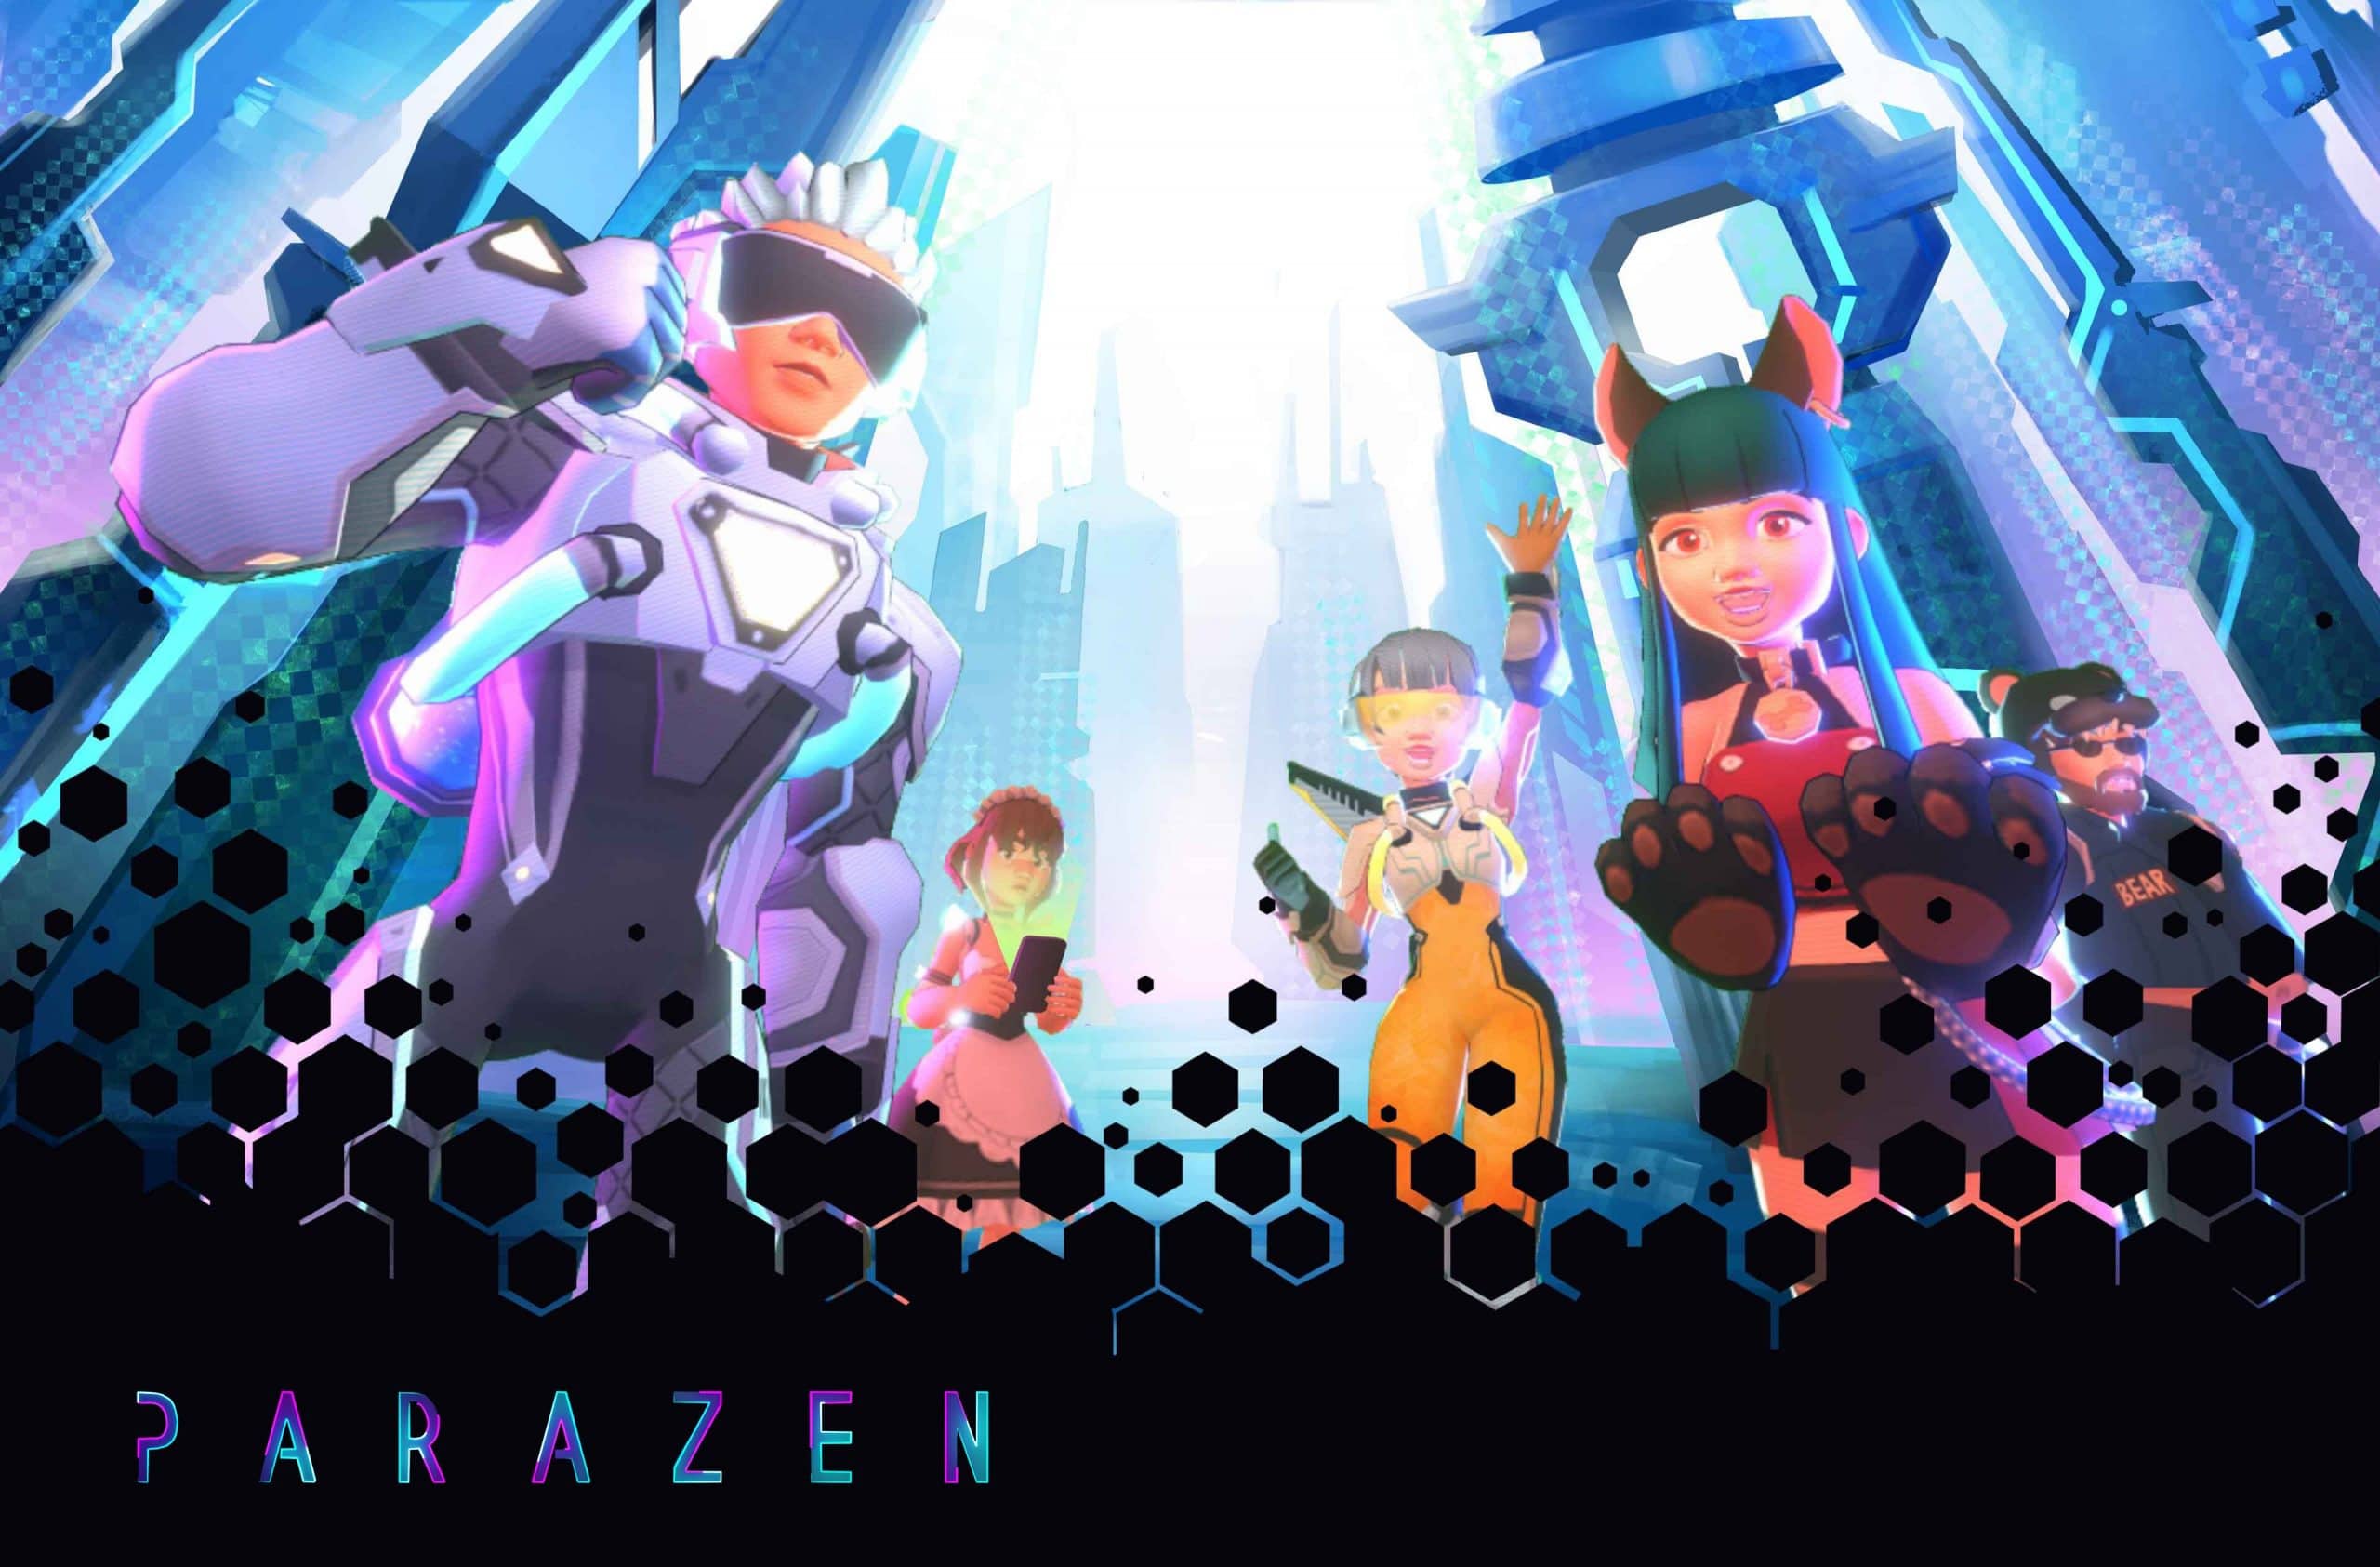 PARAZEN PARALAND featuring very colourful futuristic NFT avatars